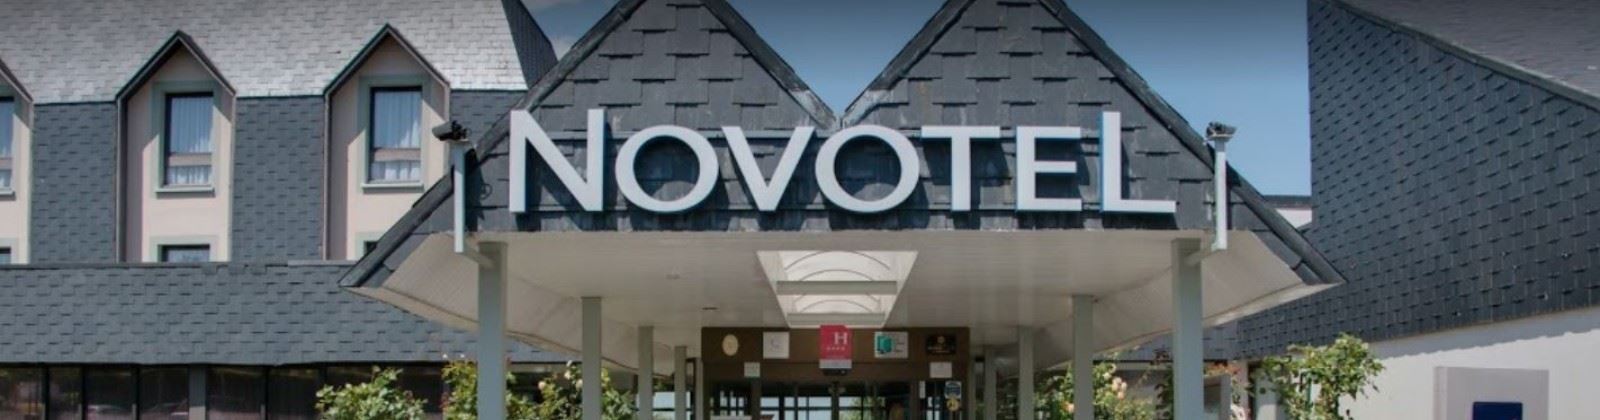 OLEVENE Image - novotel-amboise-olevene-hotel-restaurant-seminaire-